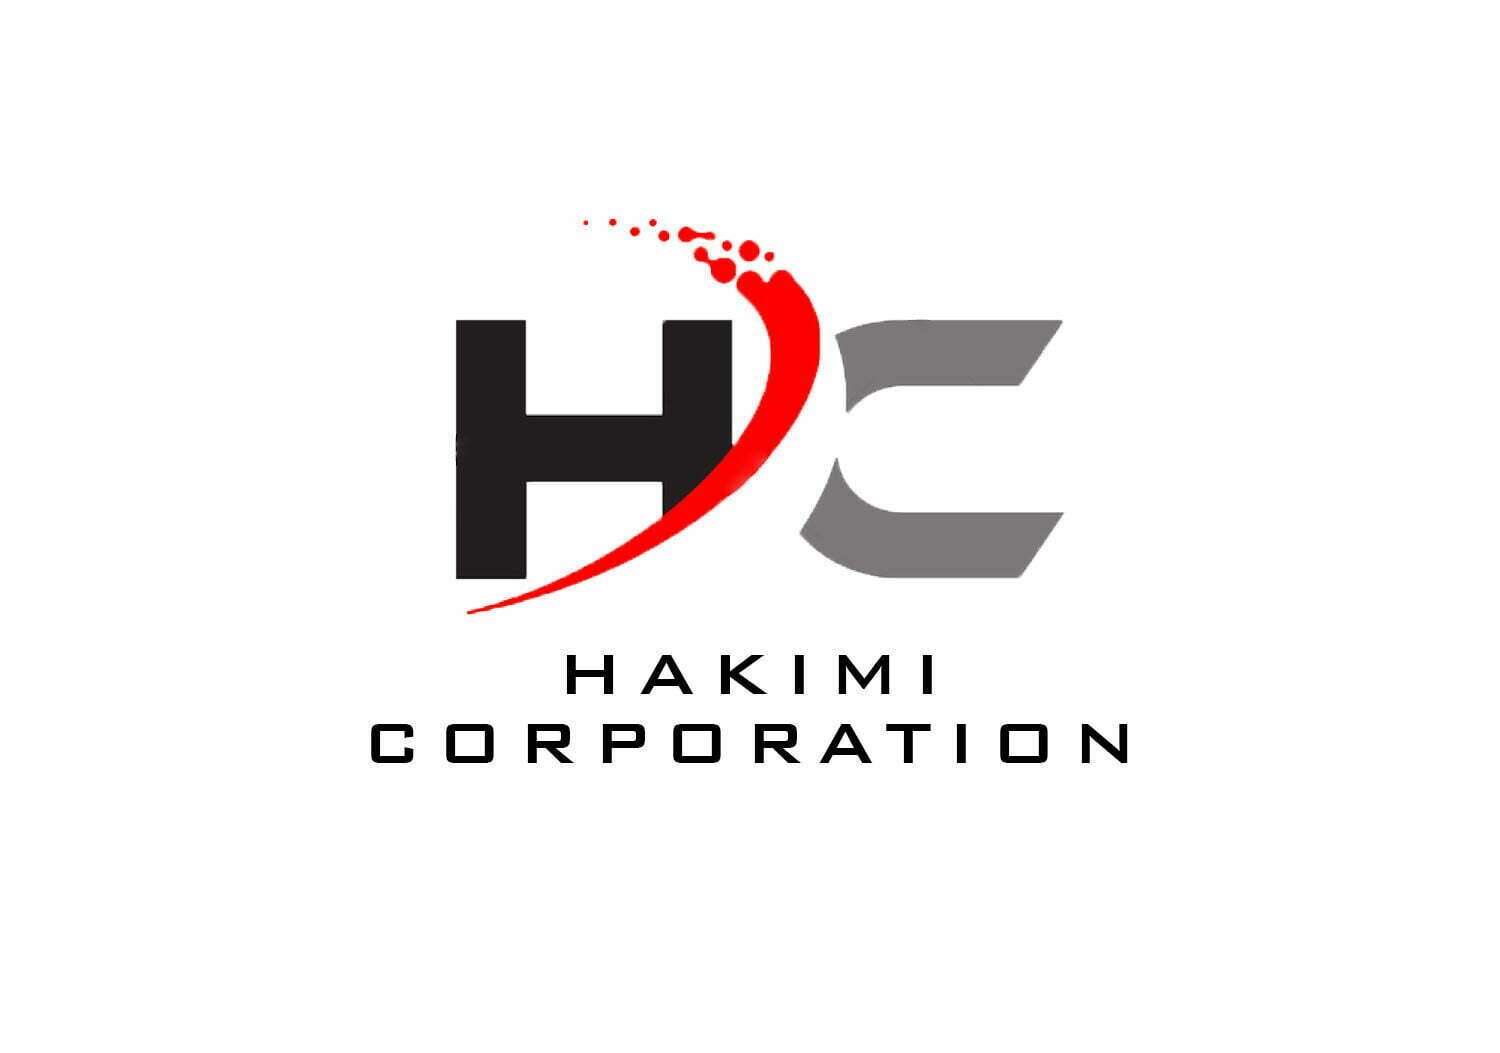 Hakimi Corporation